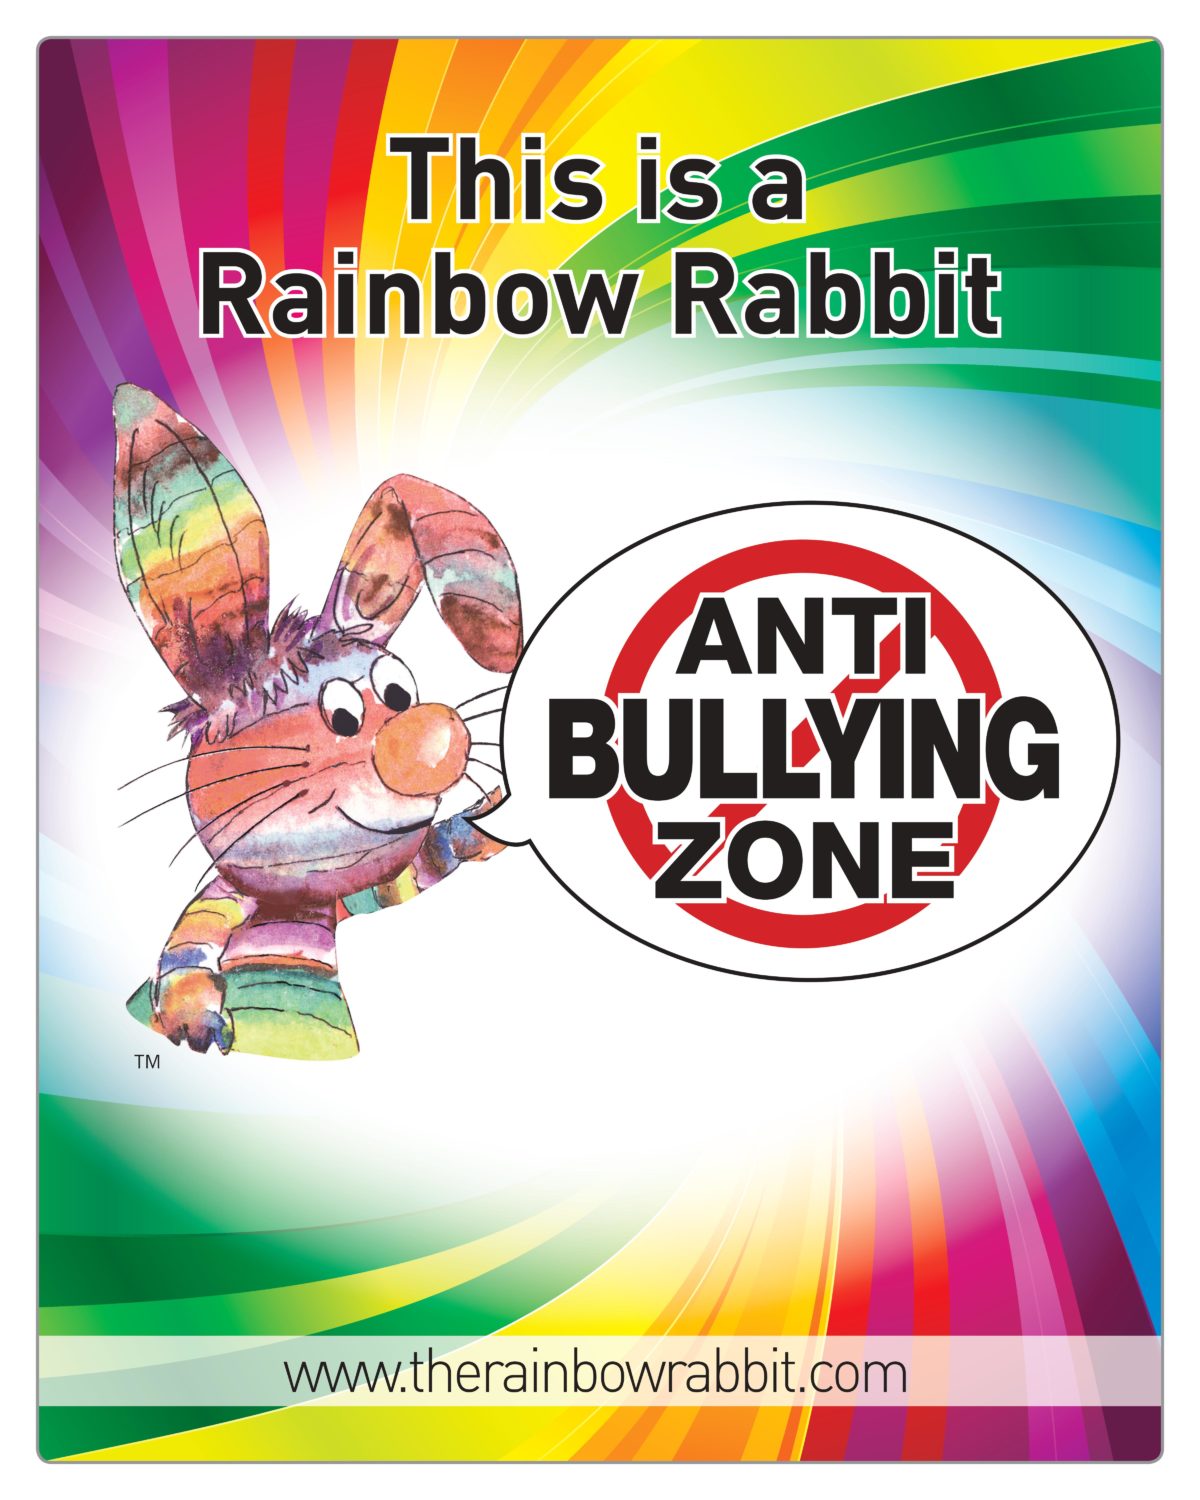 Rainbow-Rabbit-Anti-Bullying-Zone-Pic-2-1200x1500.jpg